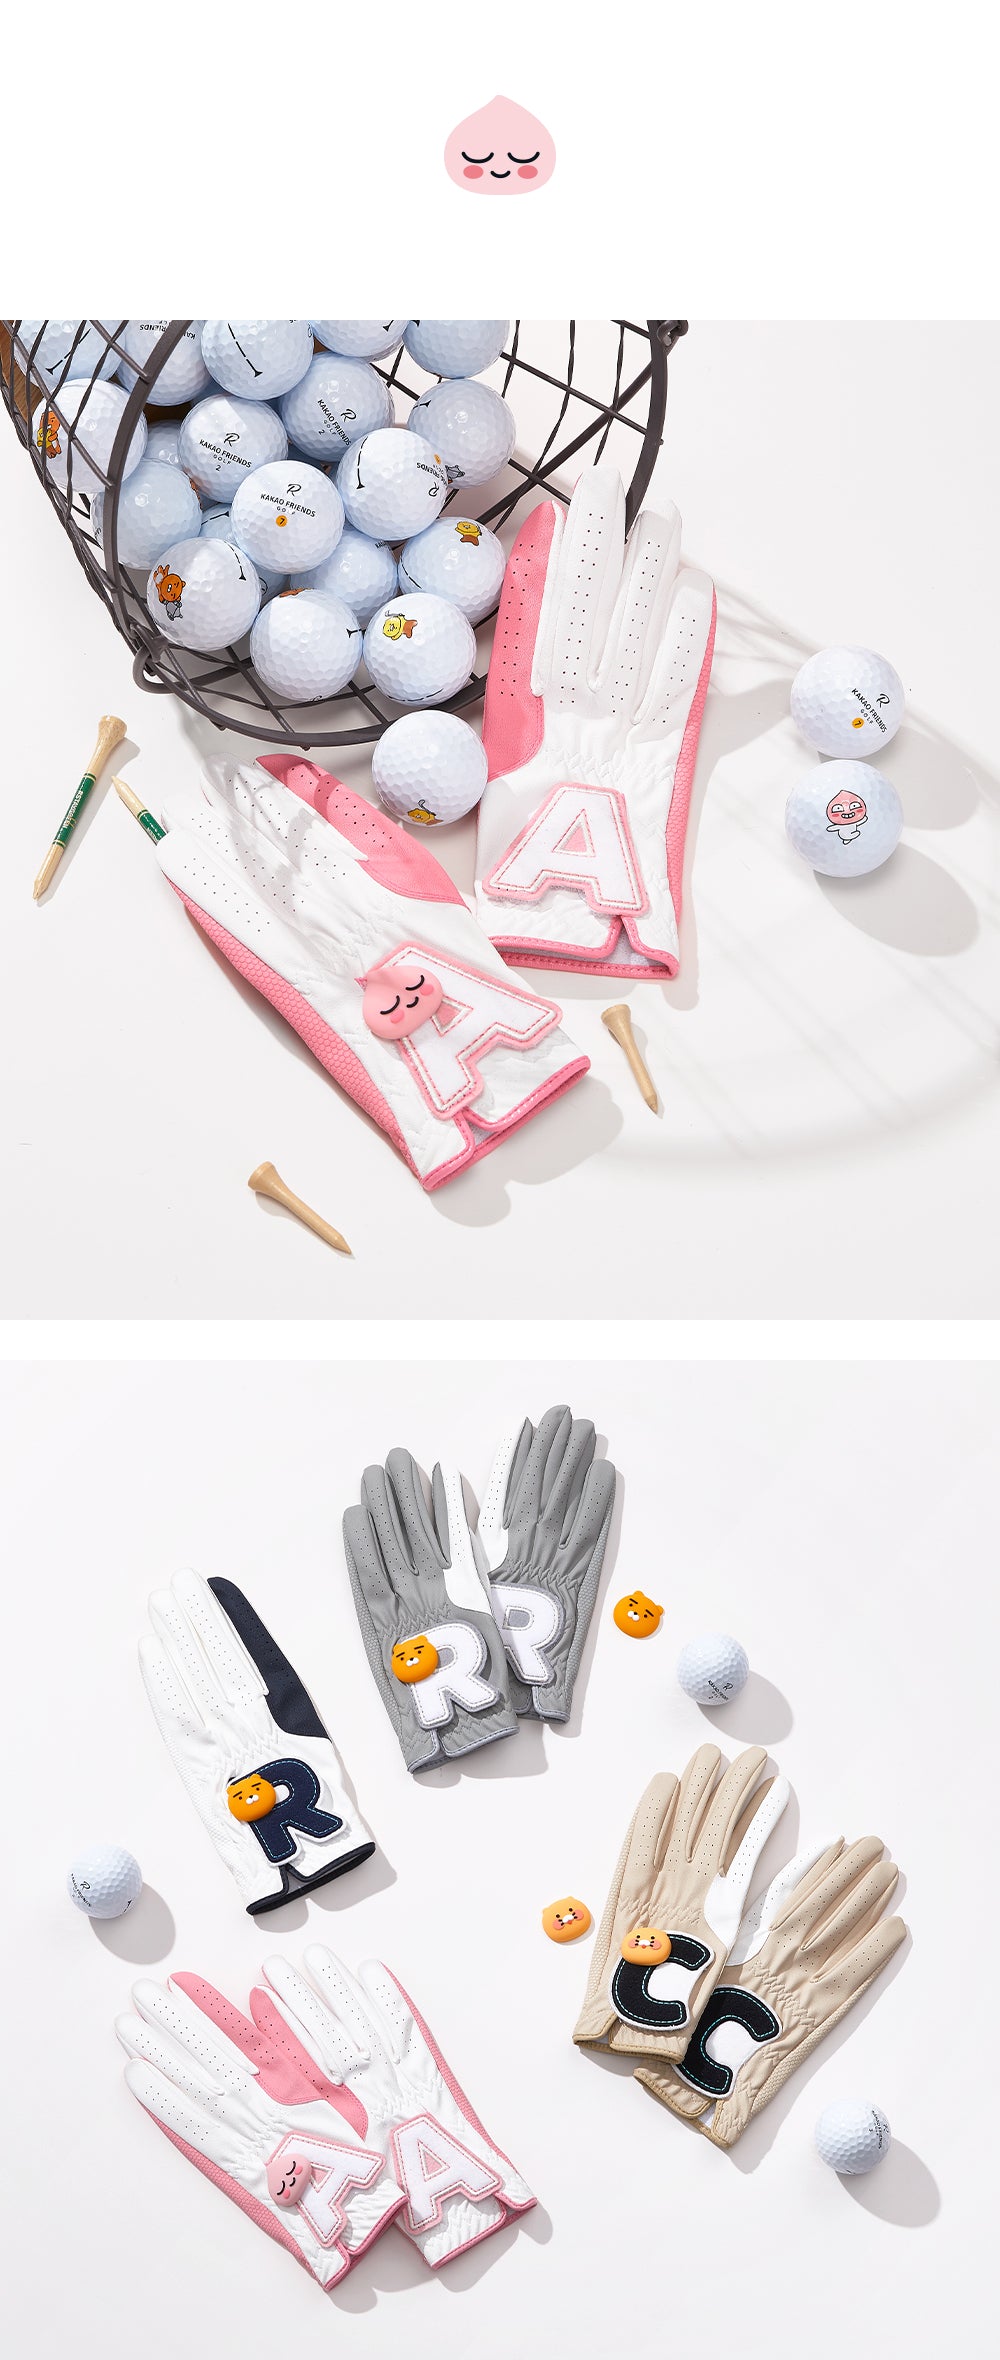 KAKAO FRIENDS: Friends Ball Marker Women's Both Hands Synthetic Leather Gloves - Apeach  프렌즈 볼마커 여성 양손 합피장갑 - 어피치